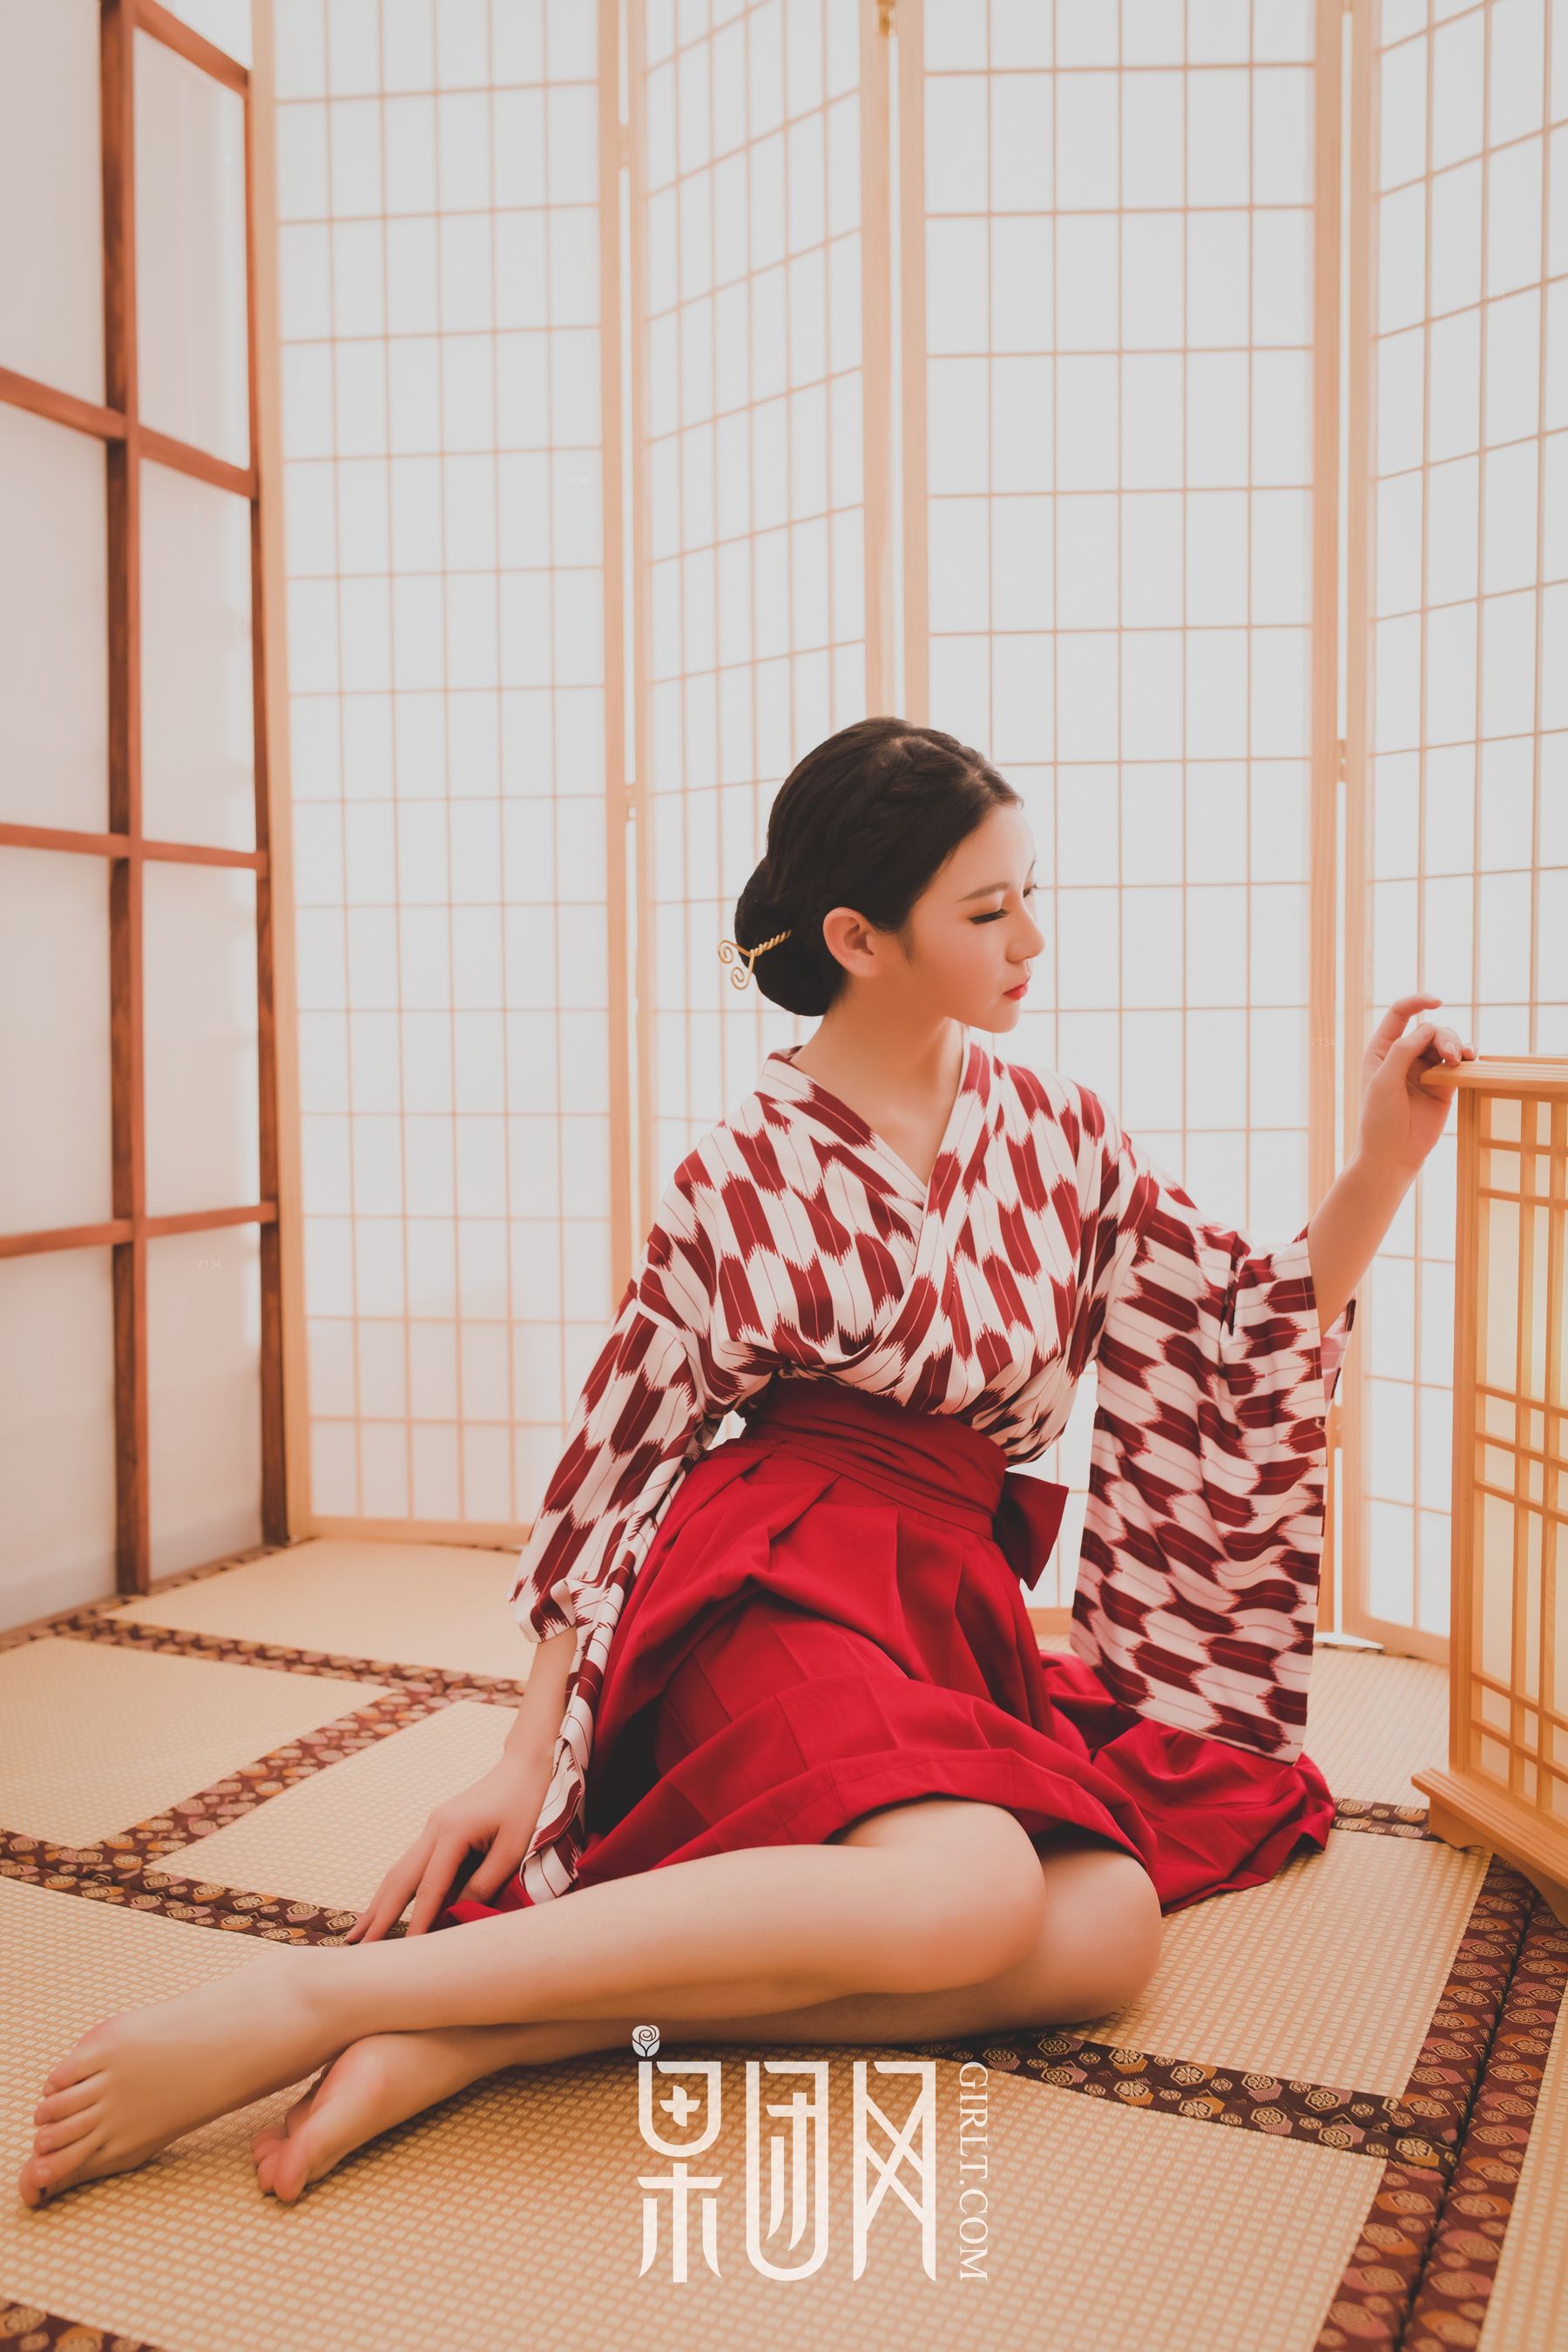 Candy “Kimono Beauty” [Guo Group Girl] No.115 Photo Album